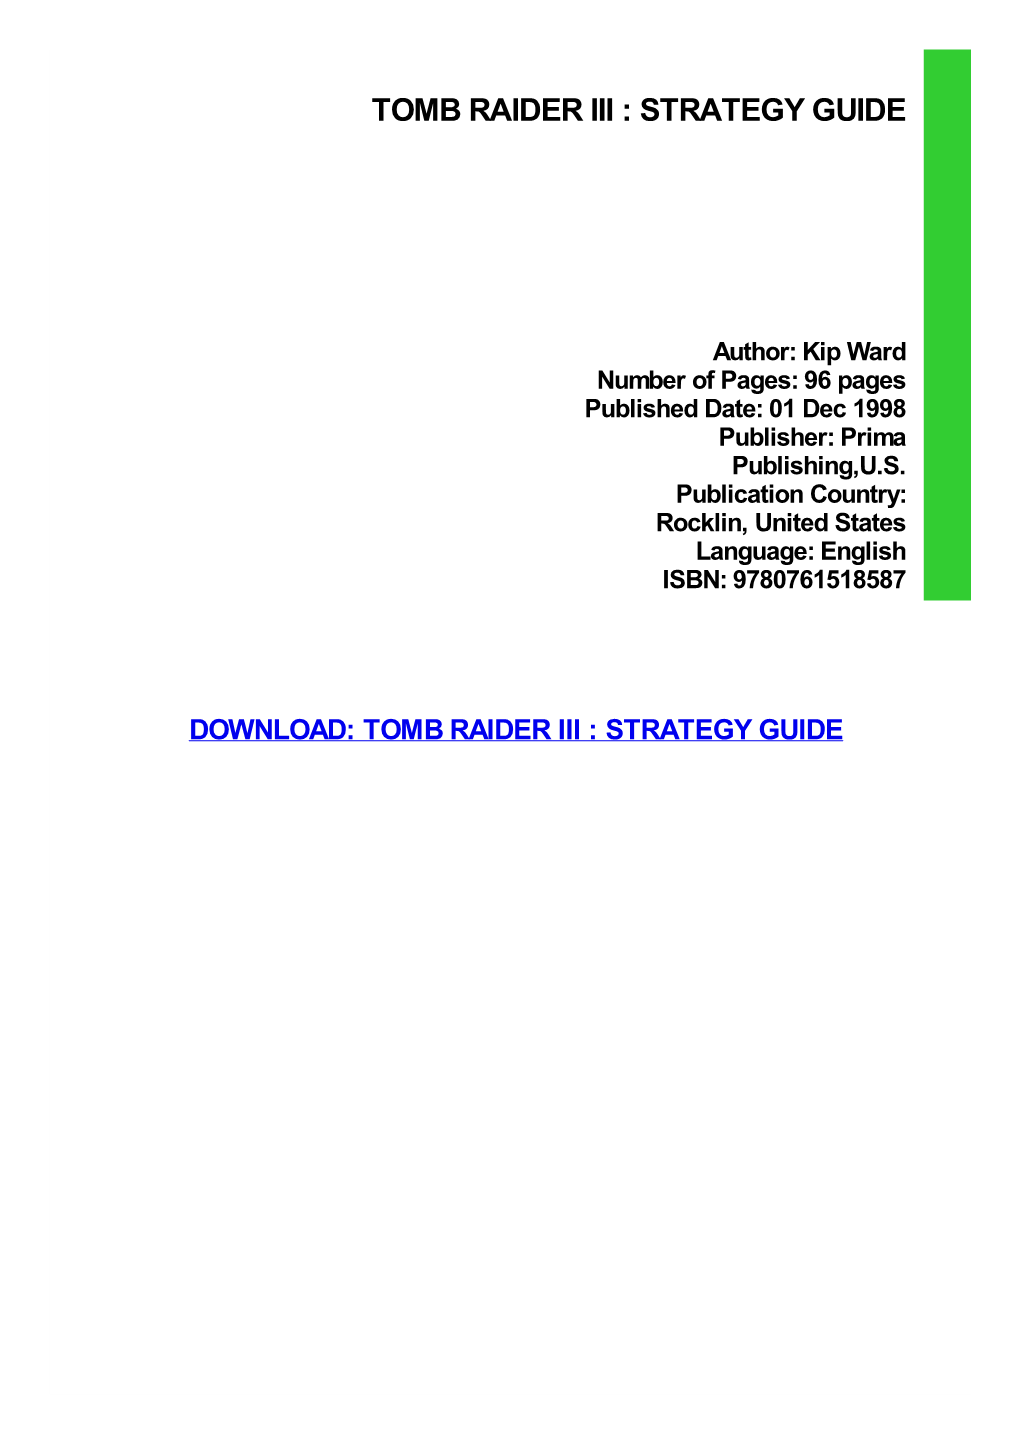 Tomb Raider III : Strategy Guide Ebook, Epub